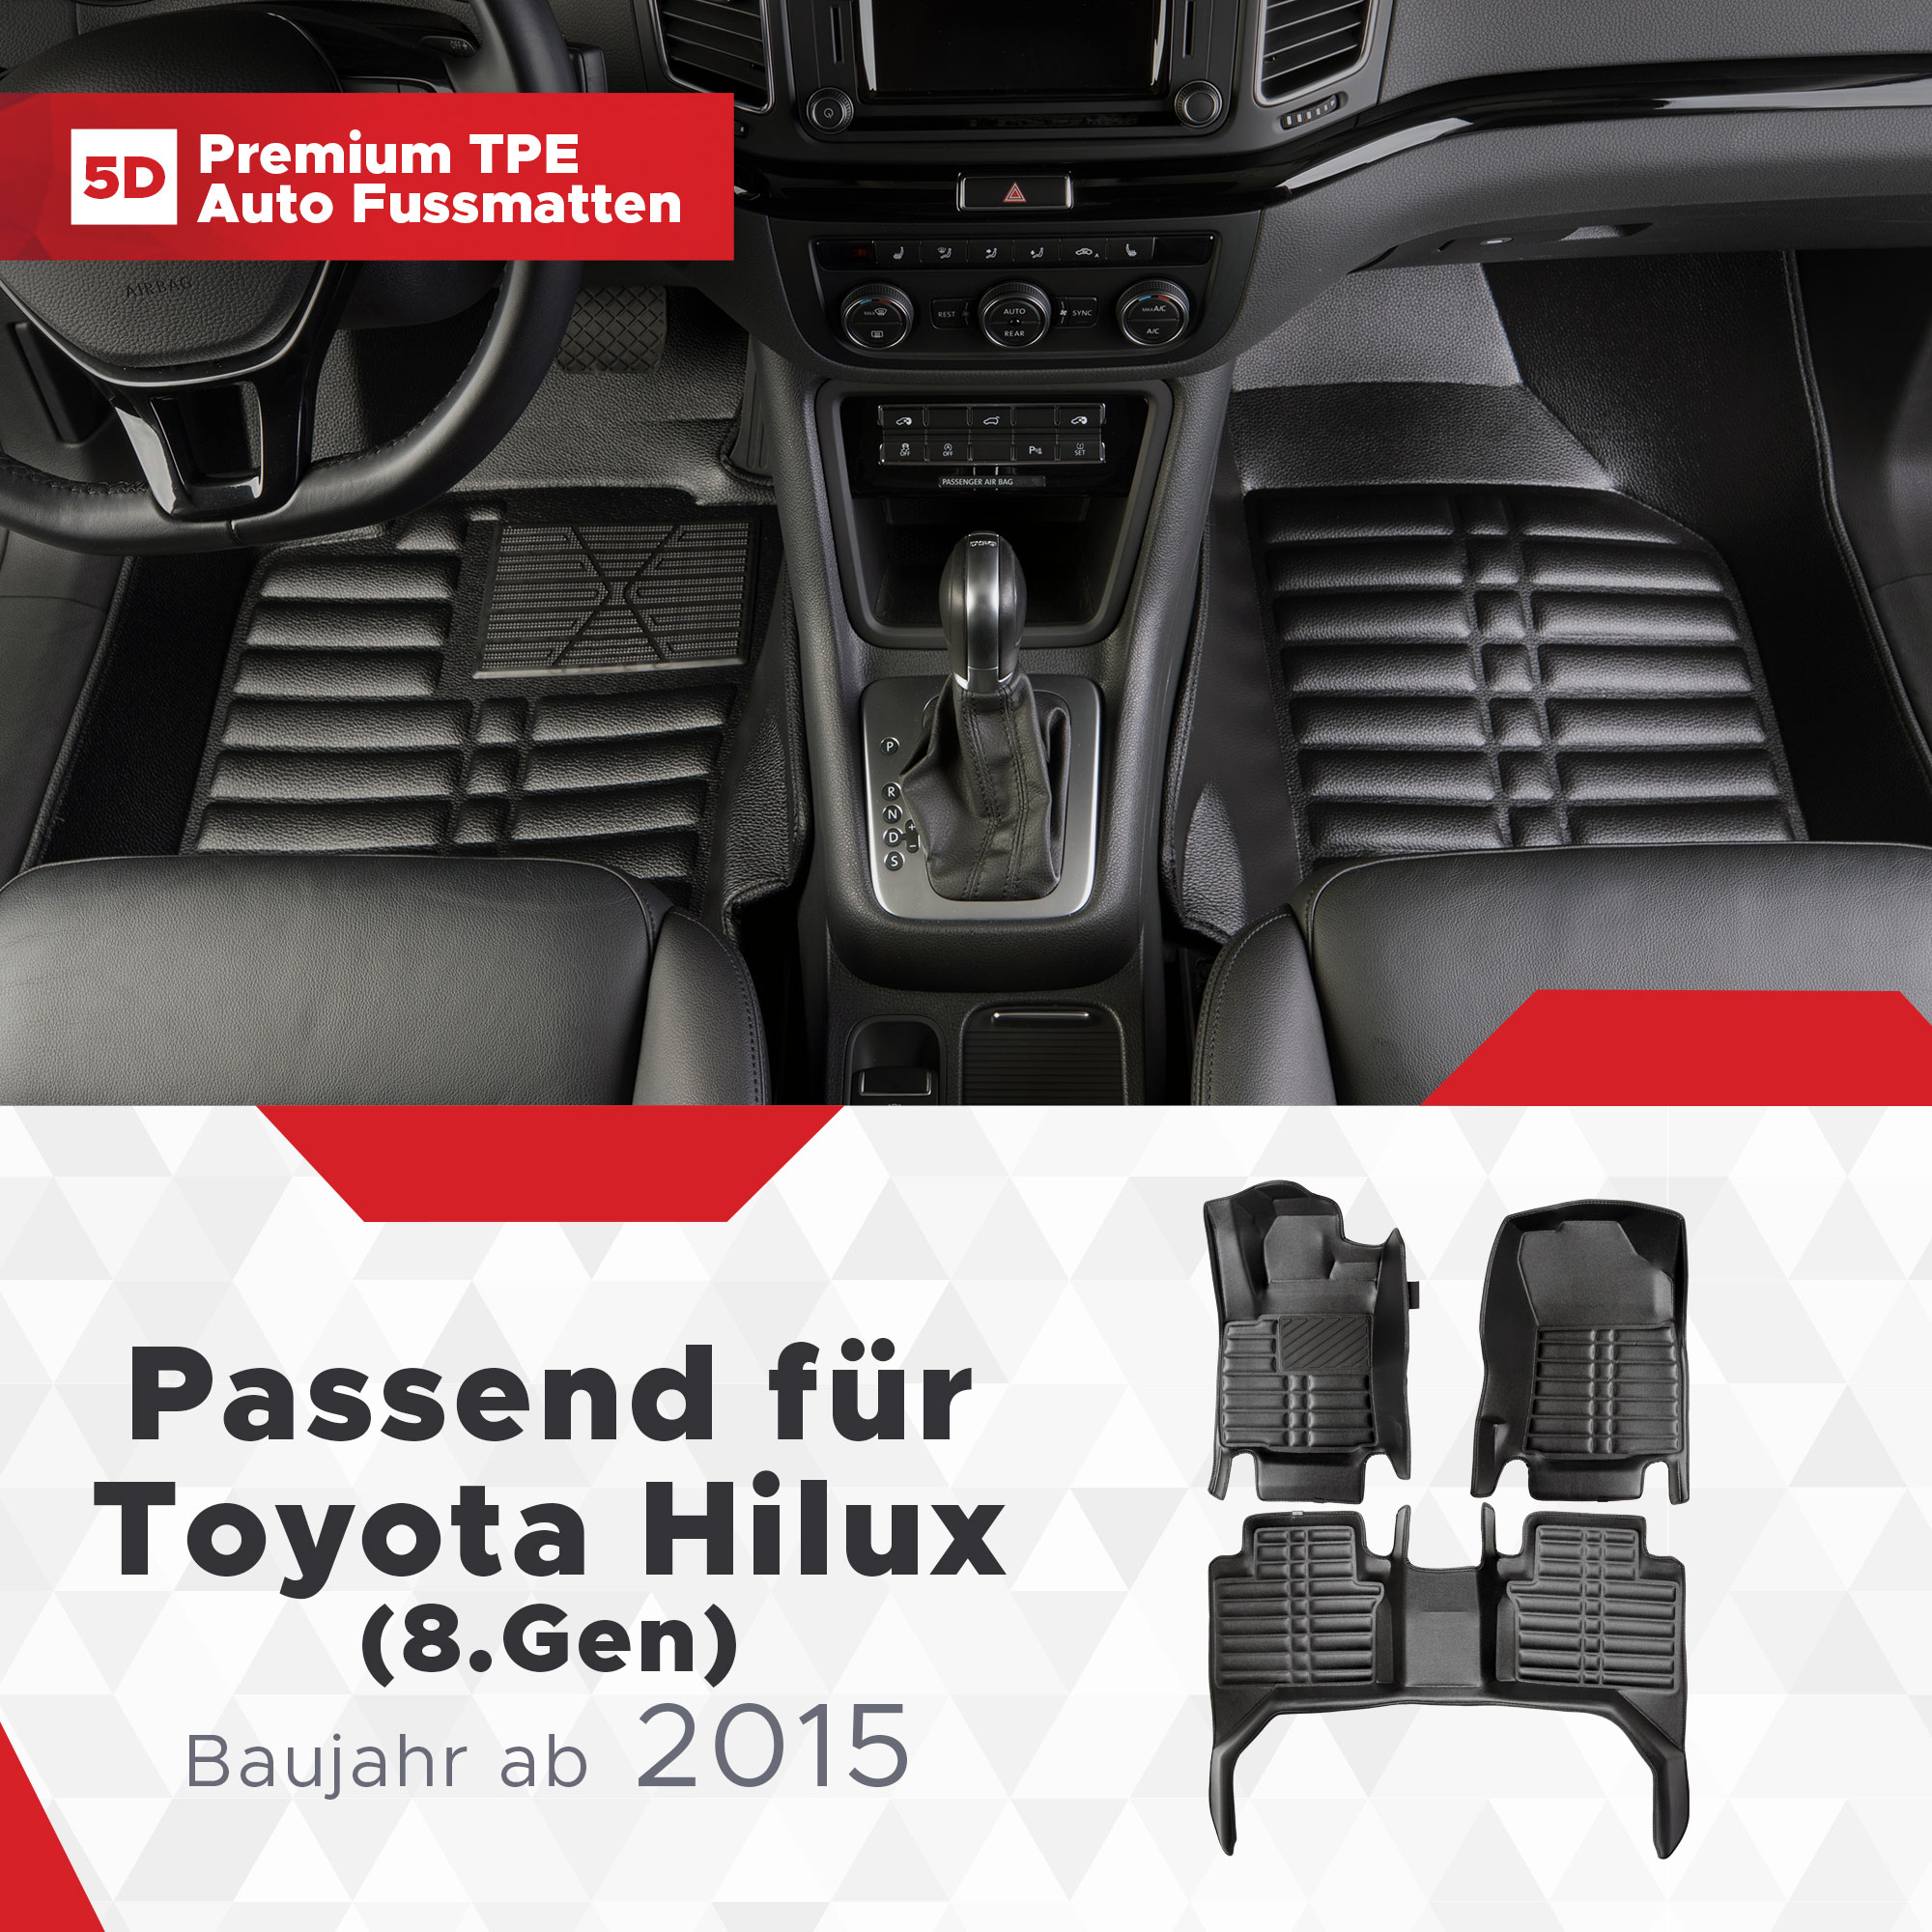 5D Toyota Hilux (8.Gen) Fussmatten ab TPE Bj 2015